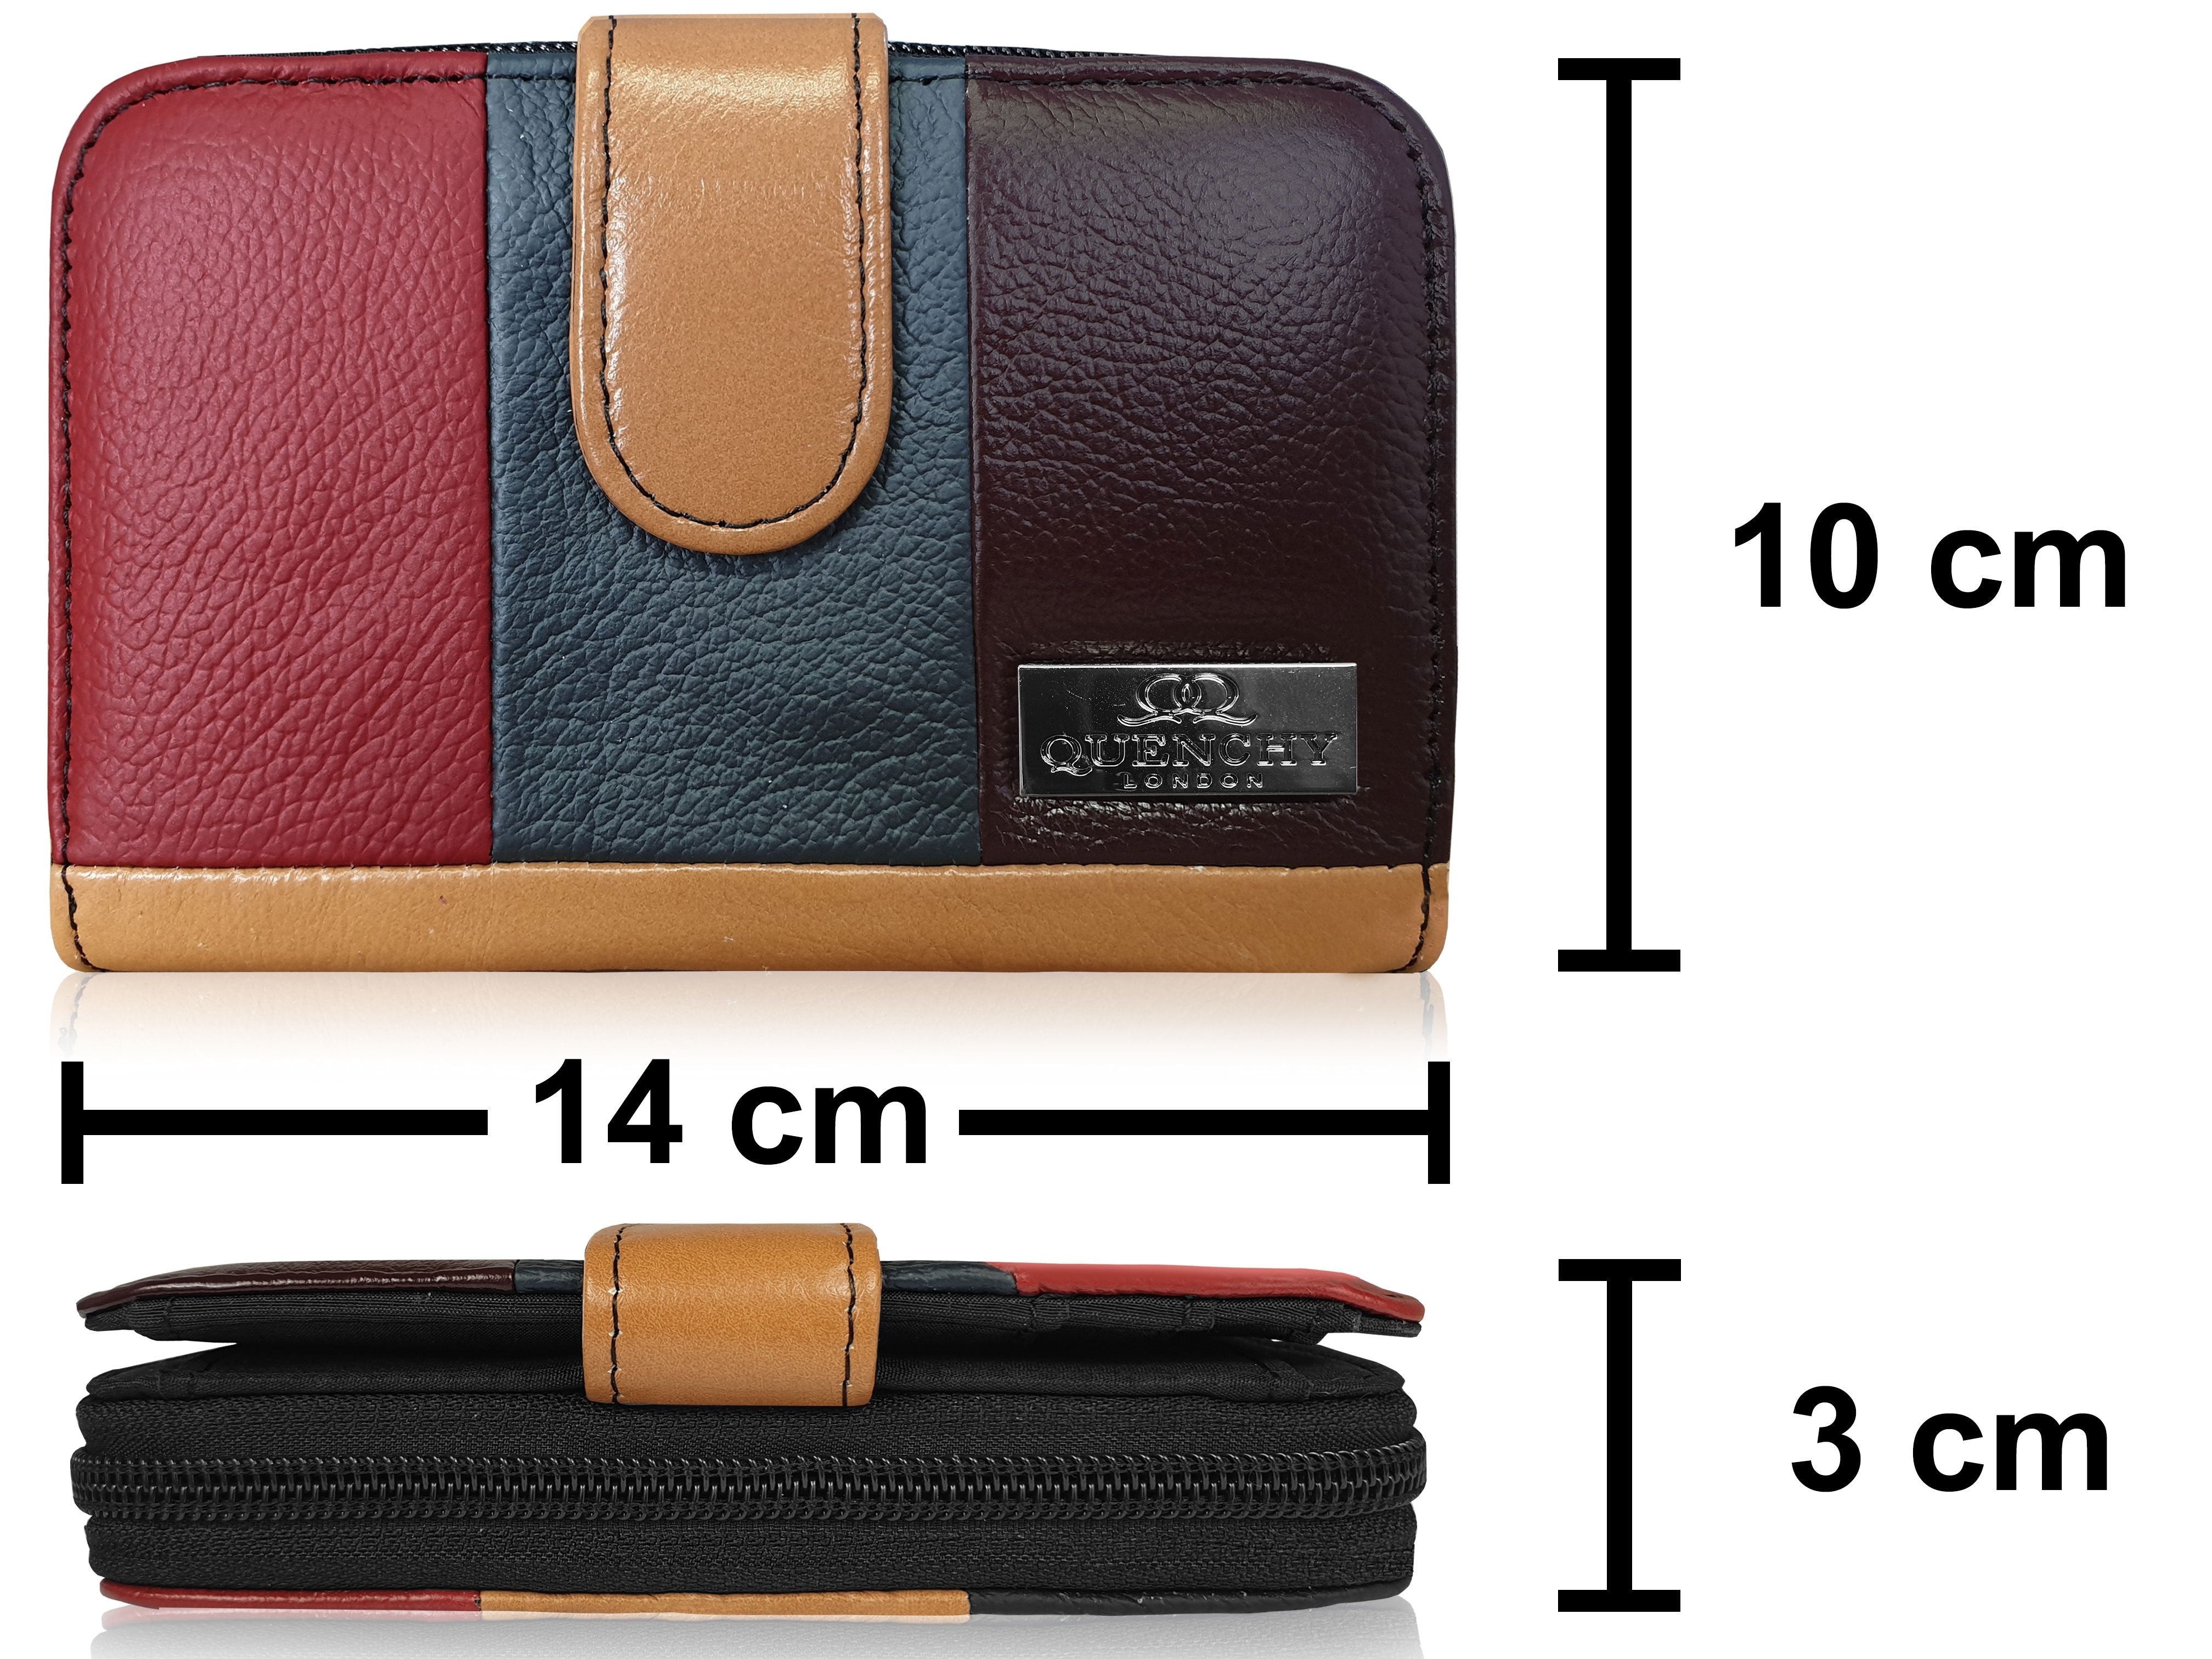 Visconti Womens RFID Medium Leather Purse SP30 | David Viggers Ltd -  Classic And Fashion Accessories